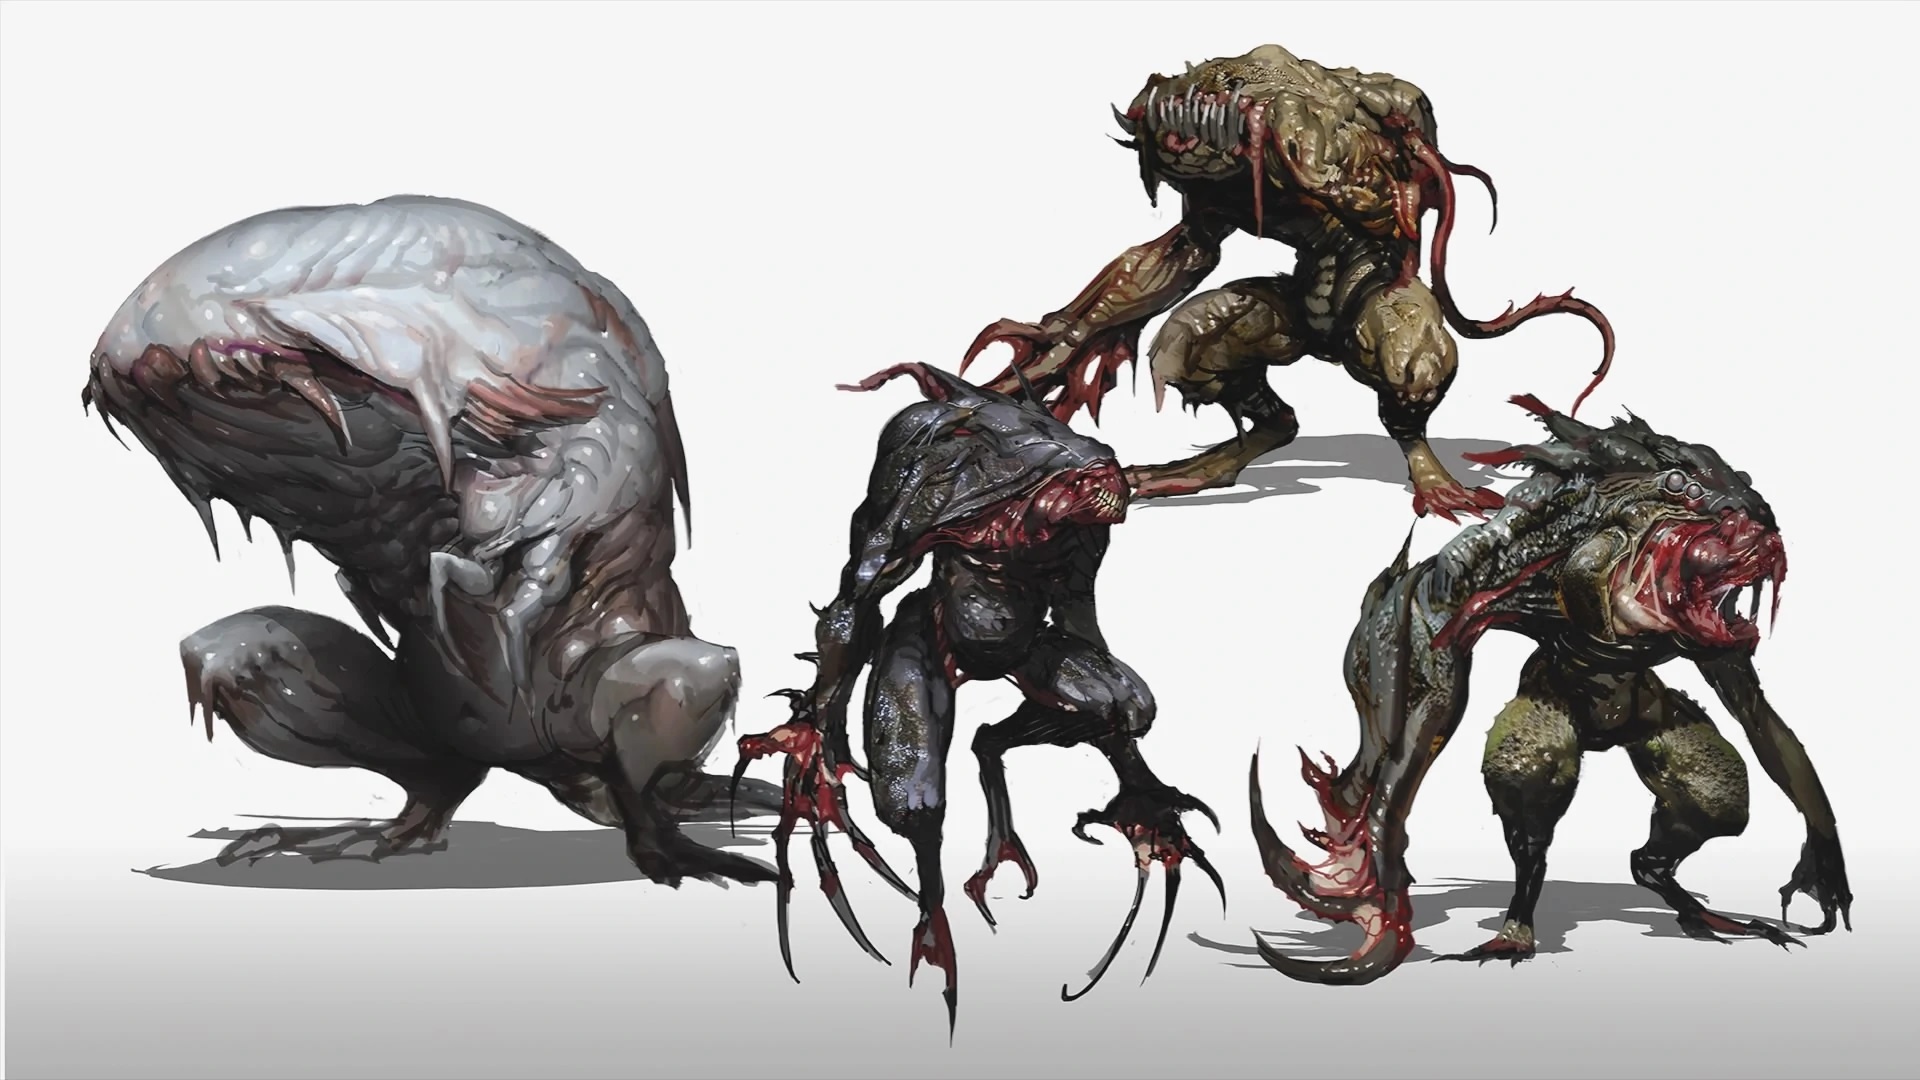 Концепт-арты Resident Evil 3 — как развивался дизайн ремейка